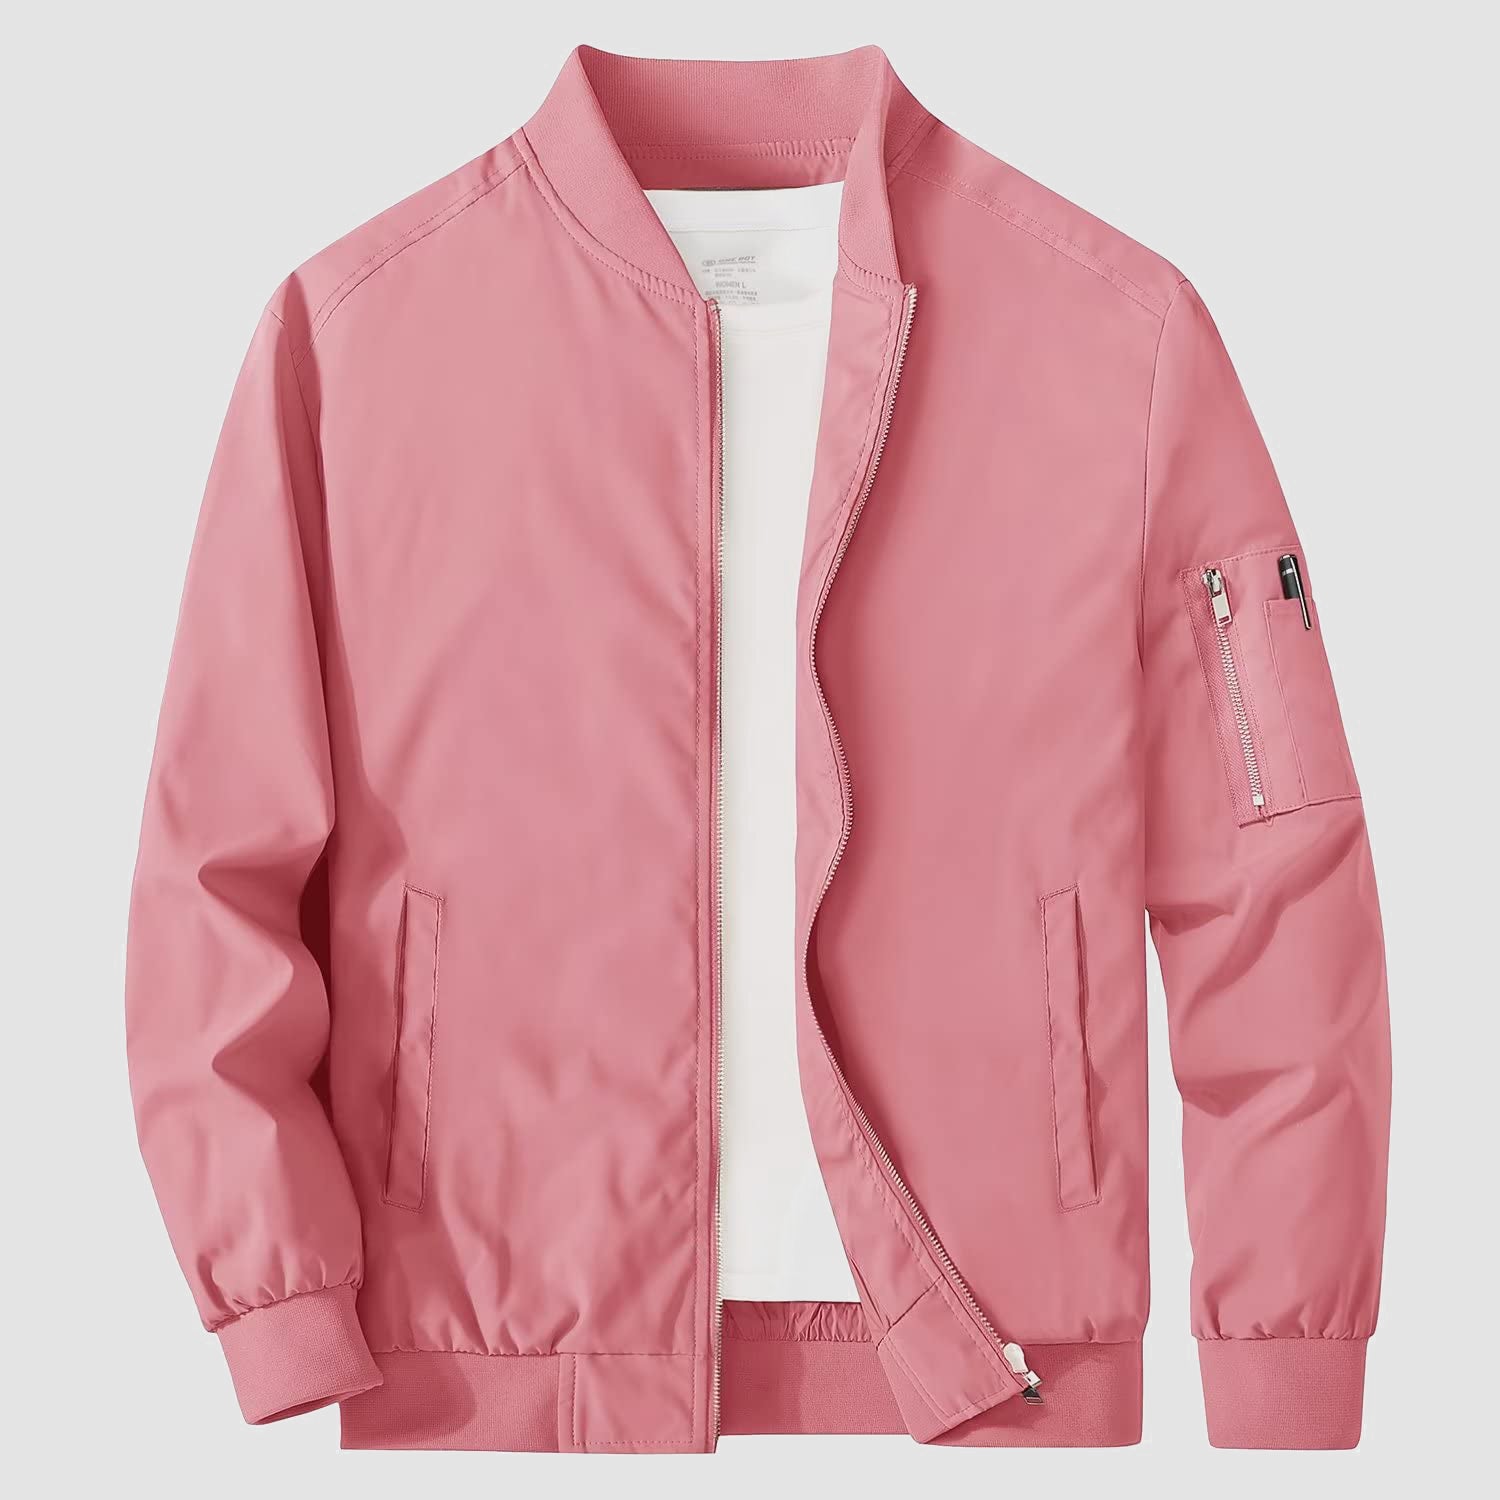 LONGBIDA Men's Denim Jacket Coat Classic Fit Trucker Jacket Casual Jean Top  with Pockets(Pink,S) at Amazon Men's Clothing store